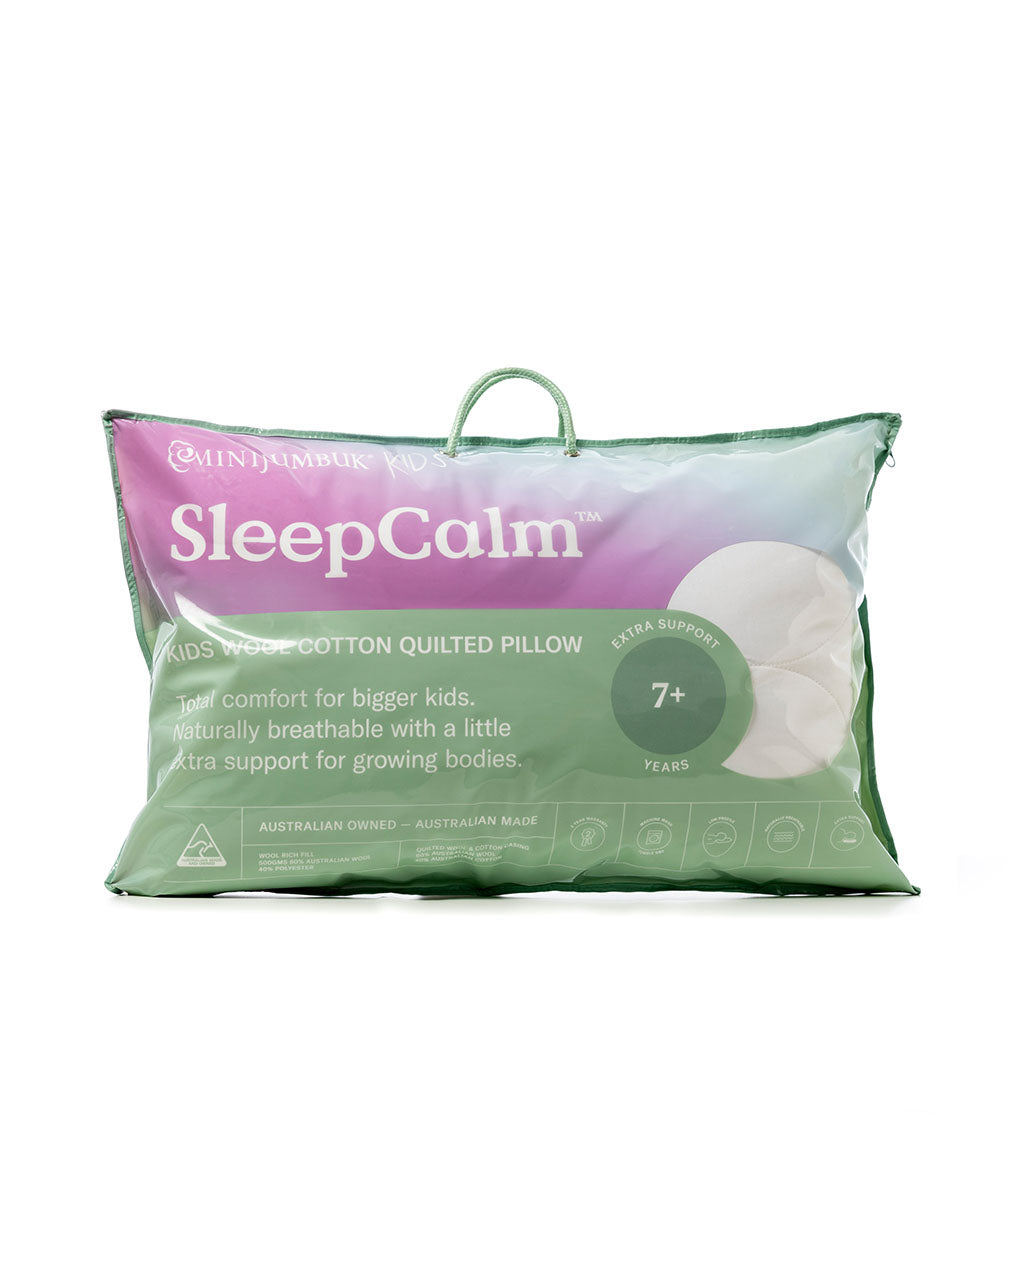 MiniJumbuk's SleepCalm™ Kids Wool Cotton Quilted Pillow